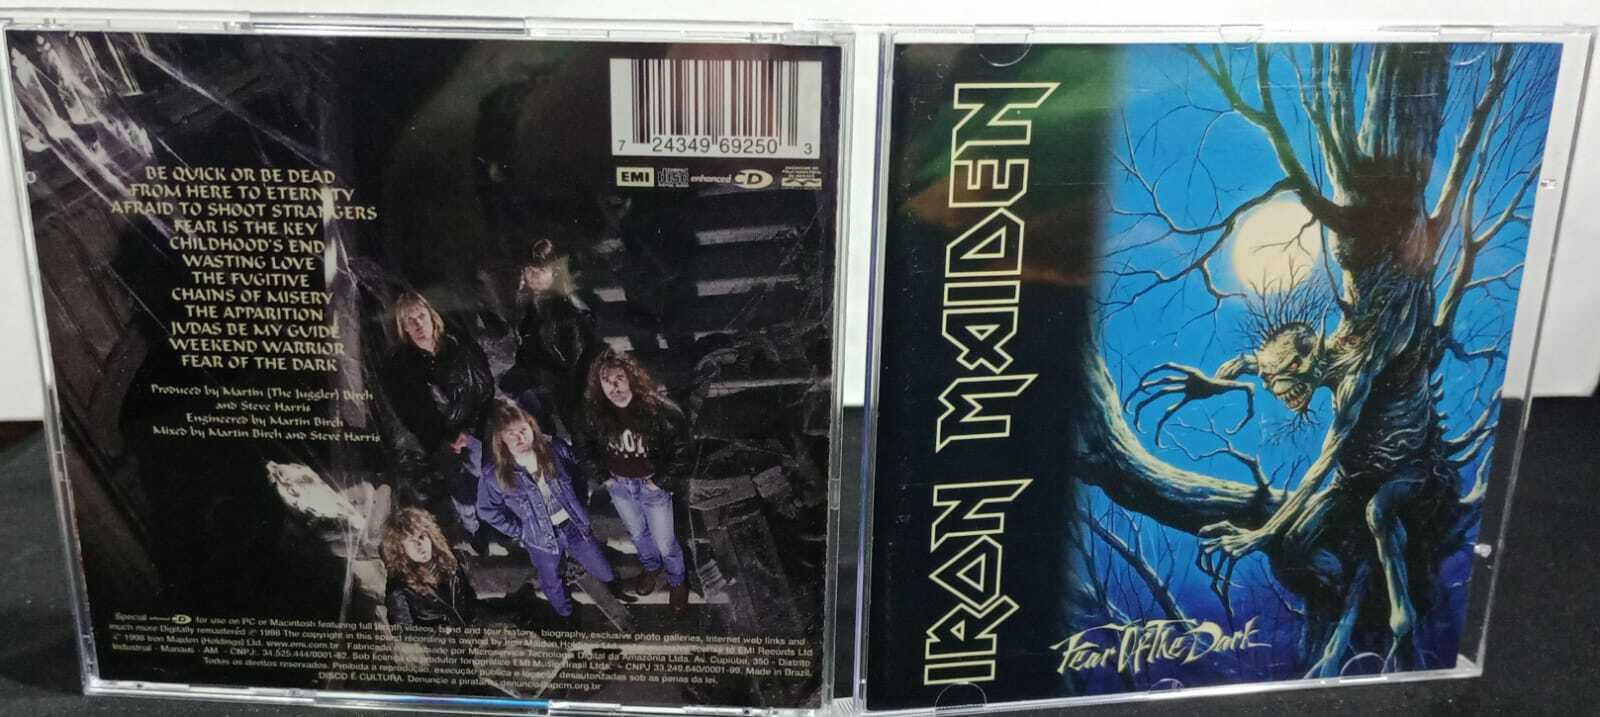 CD - Iron Maiden - Fear Of the Dark (acrilico)